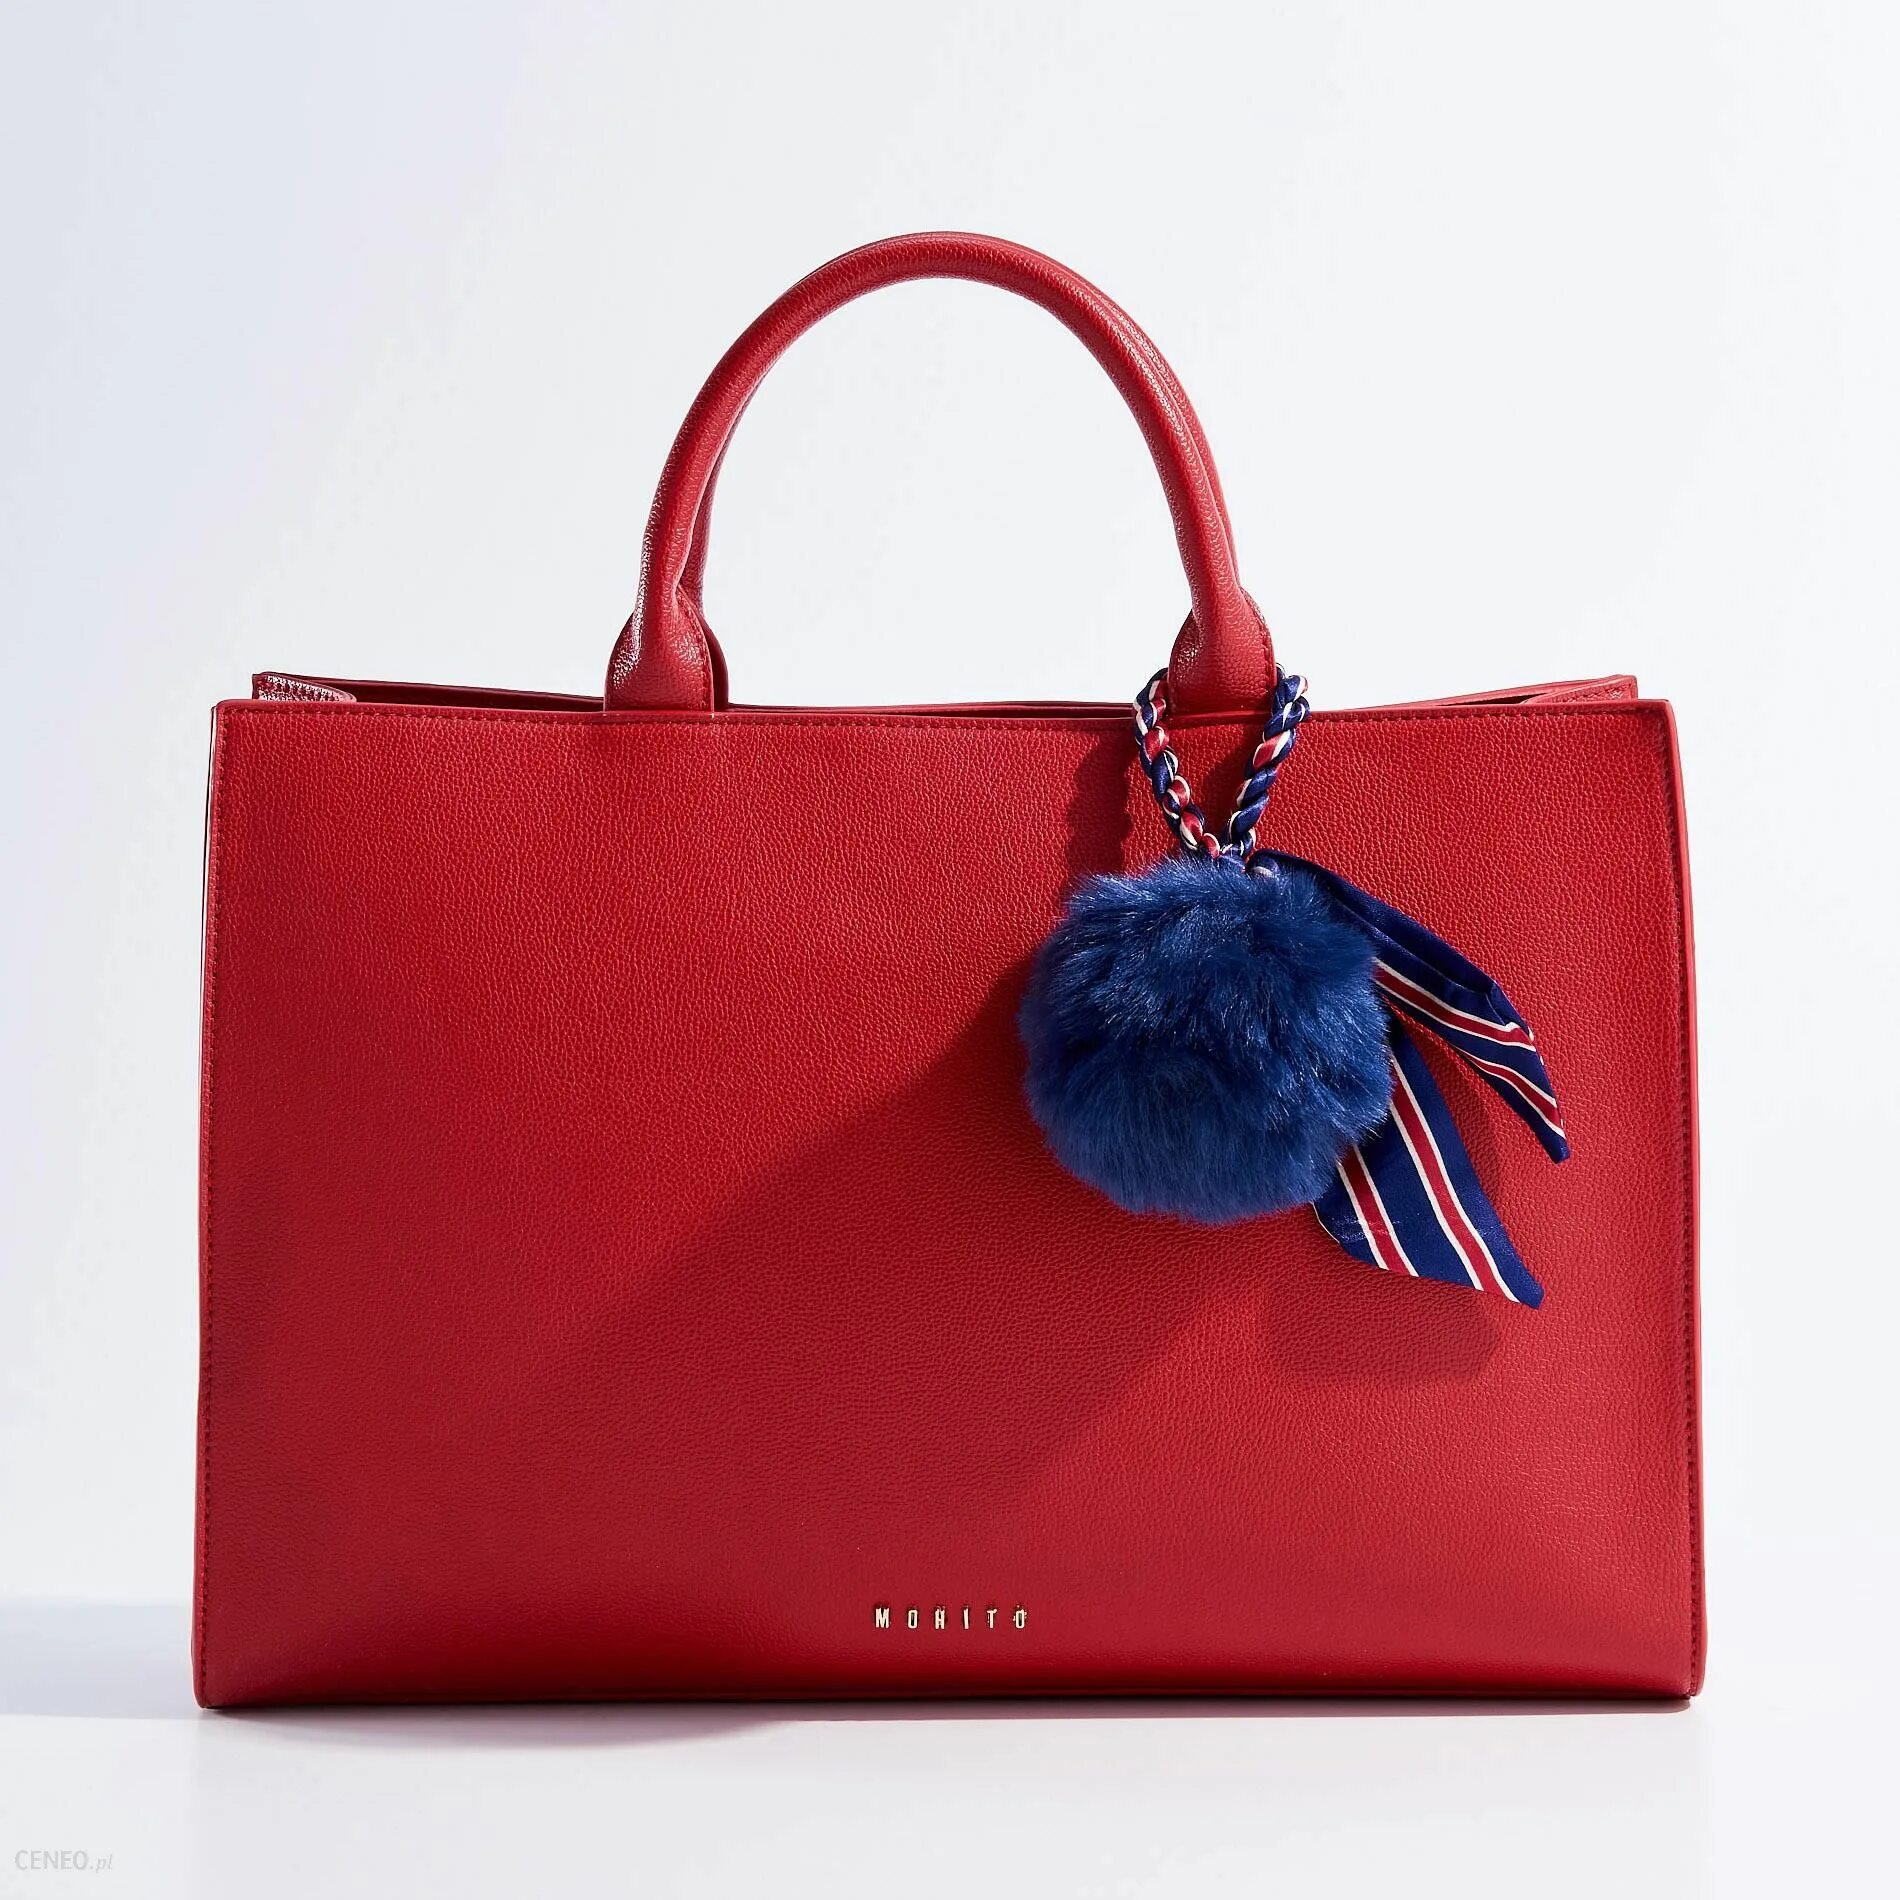 Mohito accessories. Сумка Mohito. Mohito синяя сумка. Сумка из Мохито. Красная сумка из "Mohito".